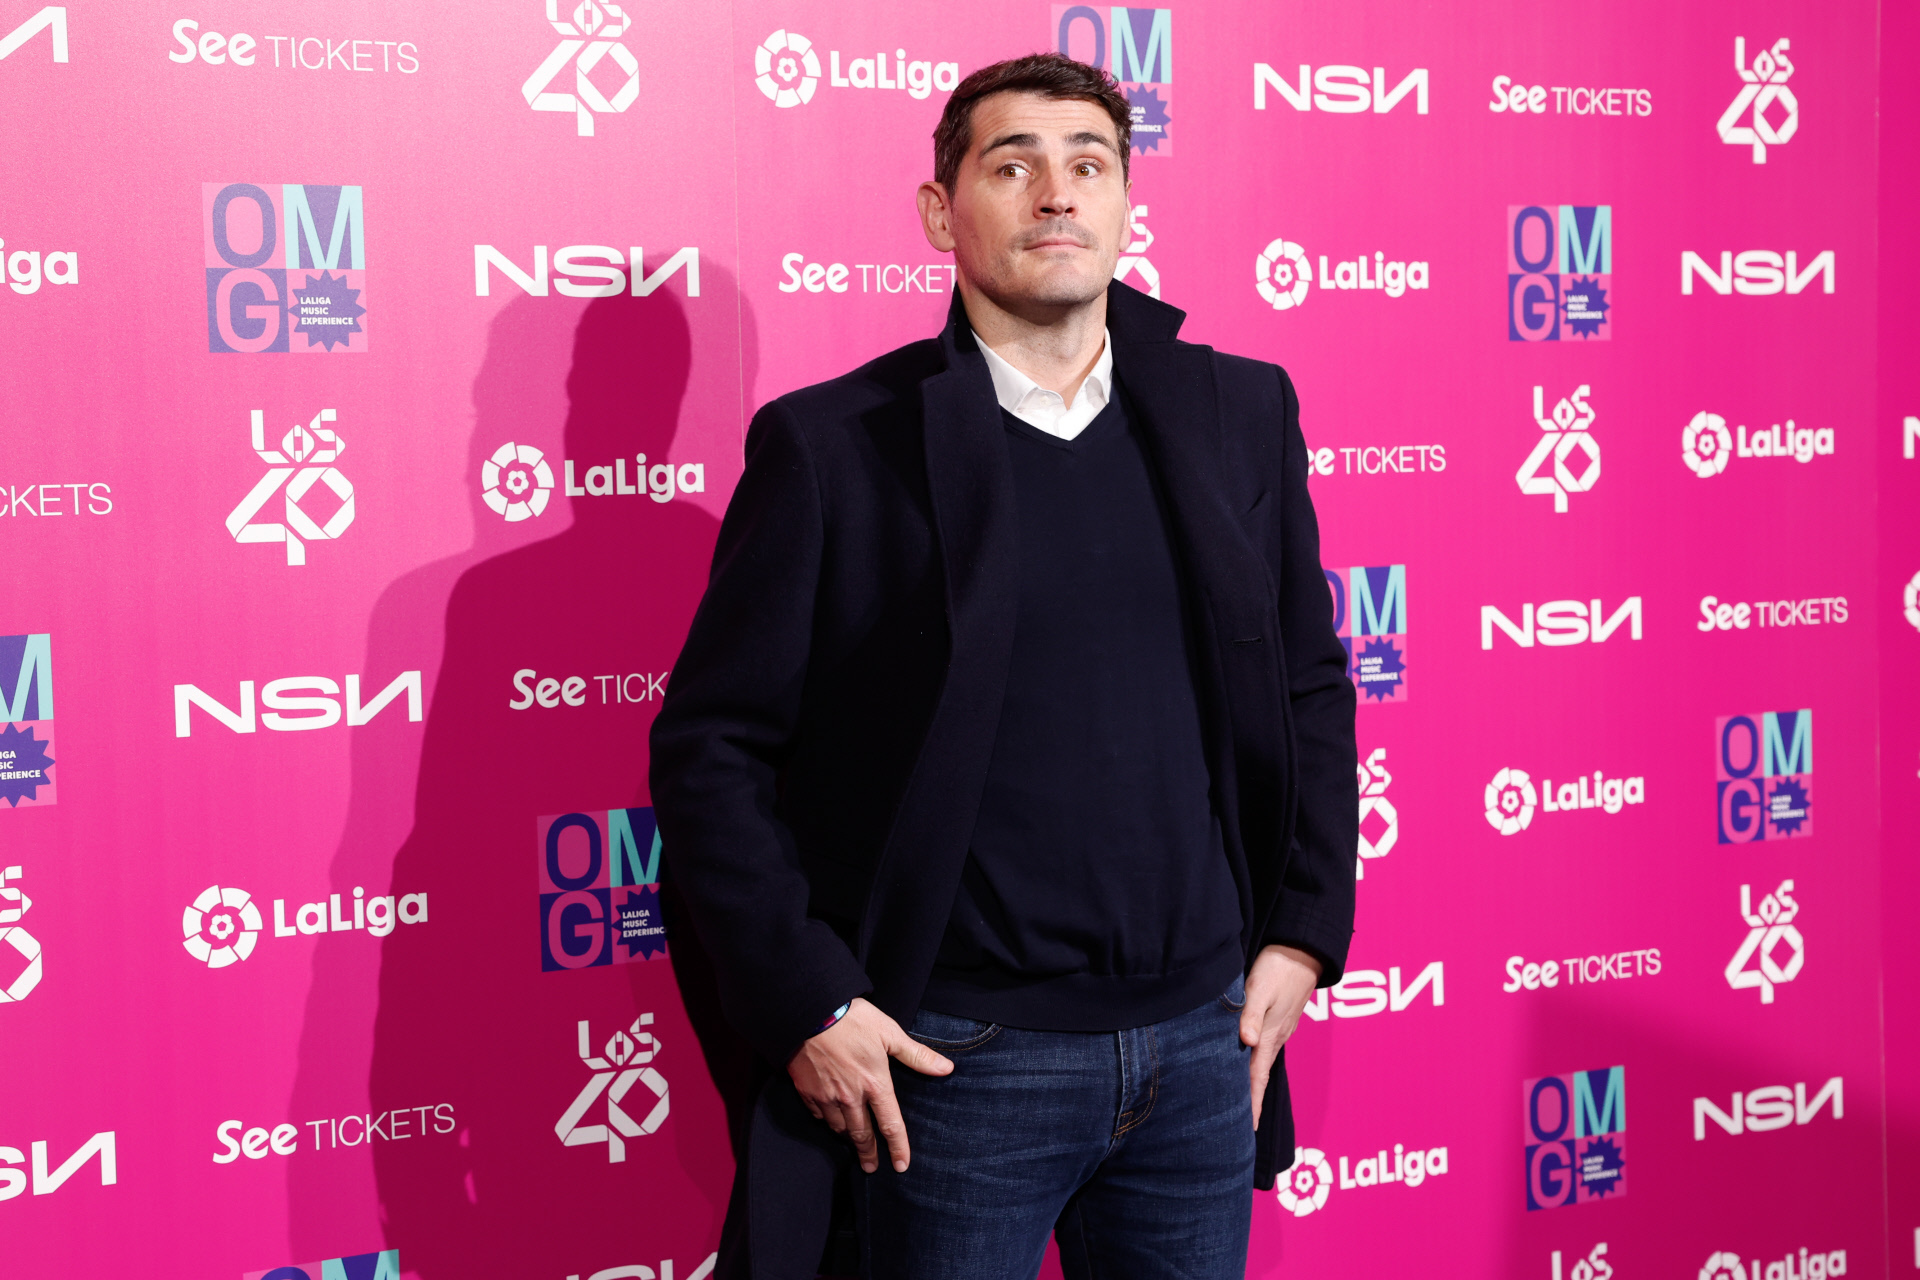 El ex jugador de ftbol Iker Casillas.